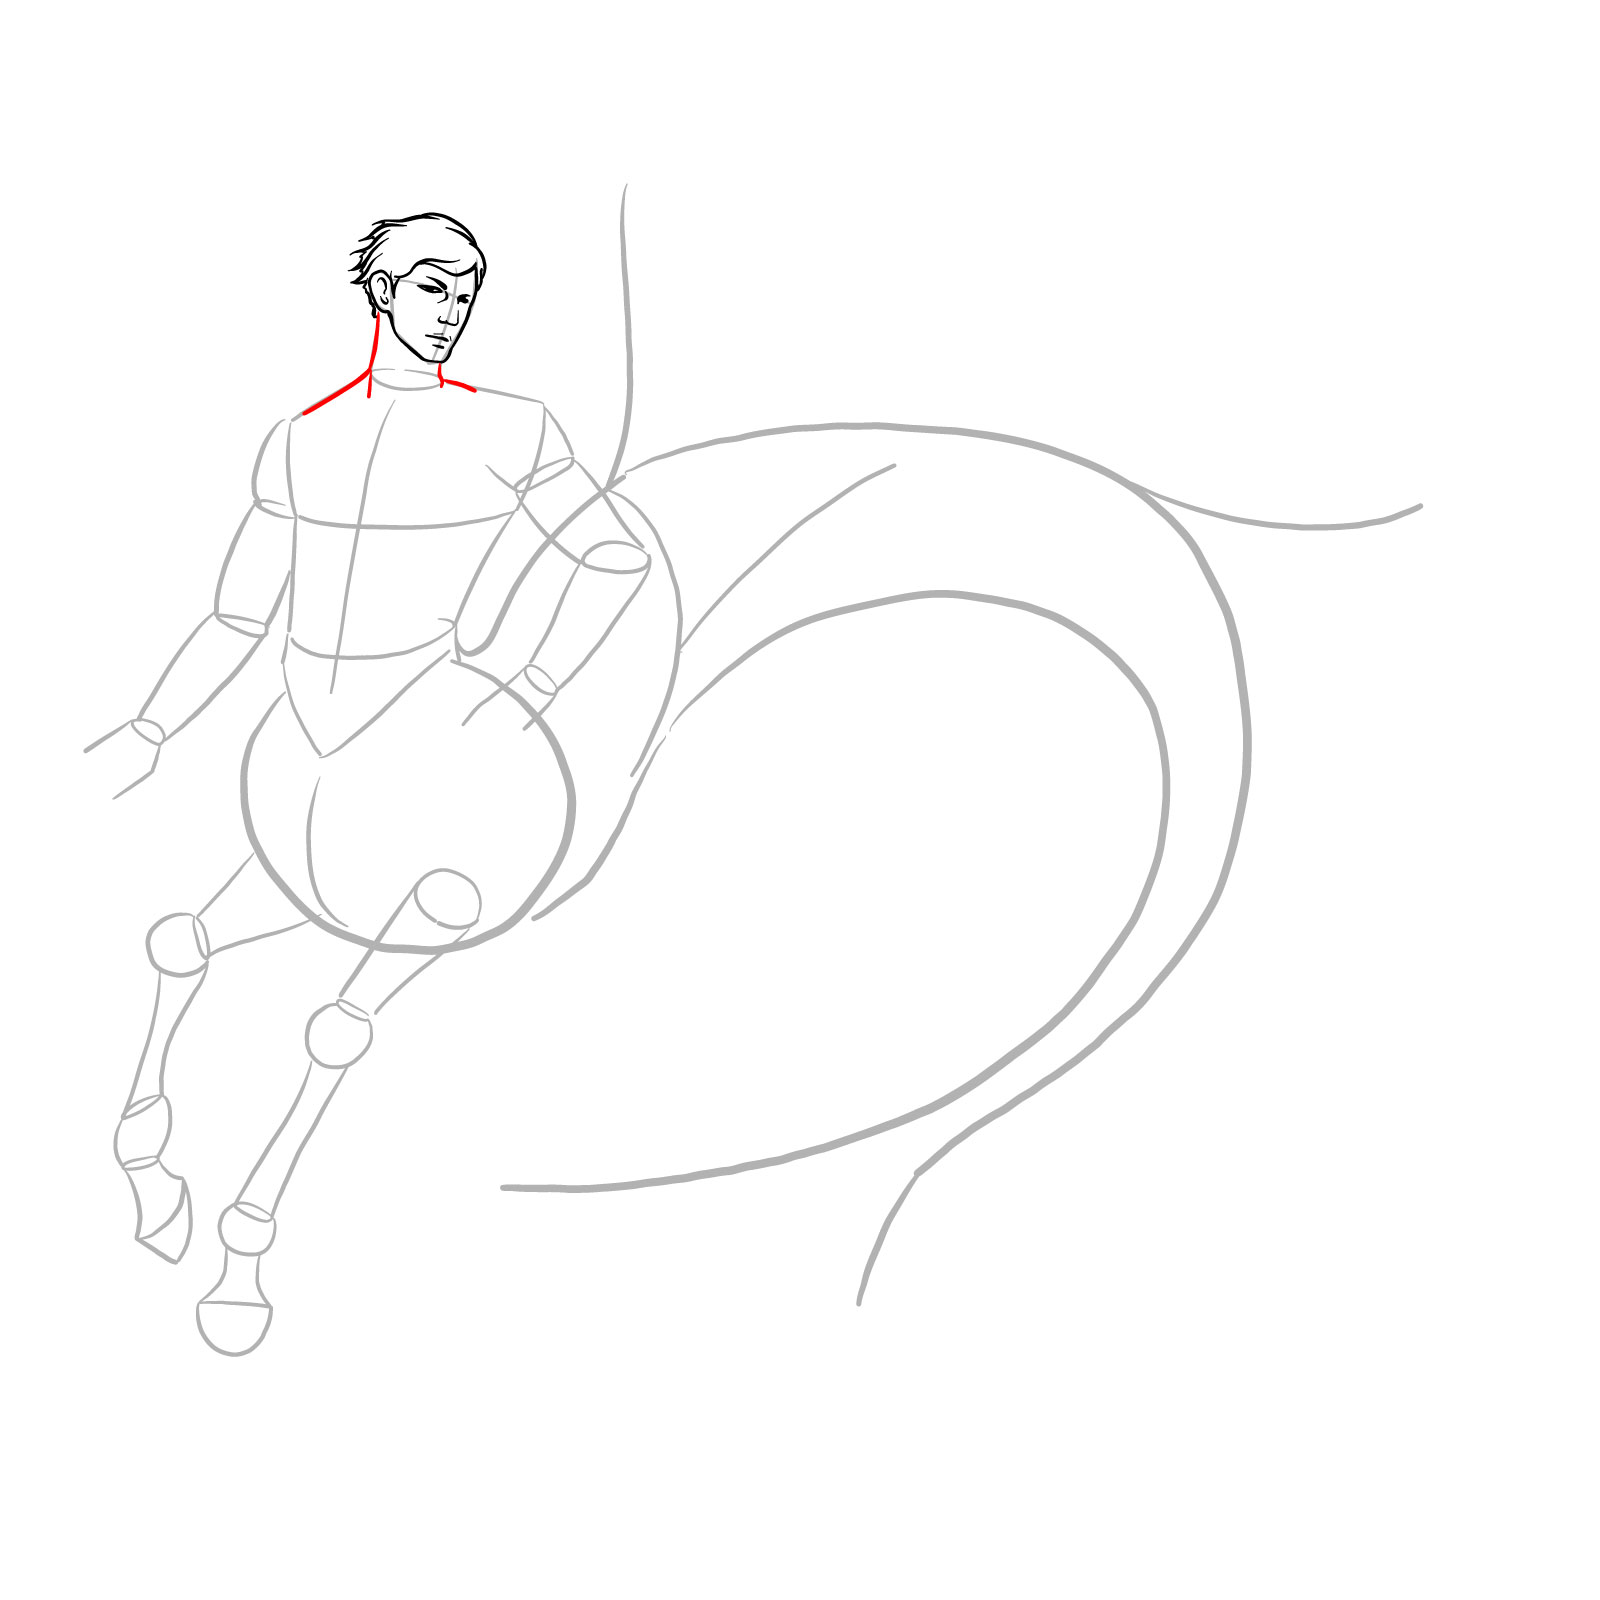 How to draw an Ichthyocentaur - step 12